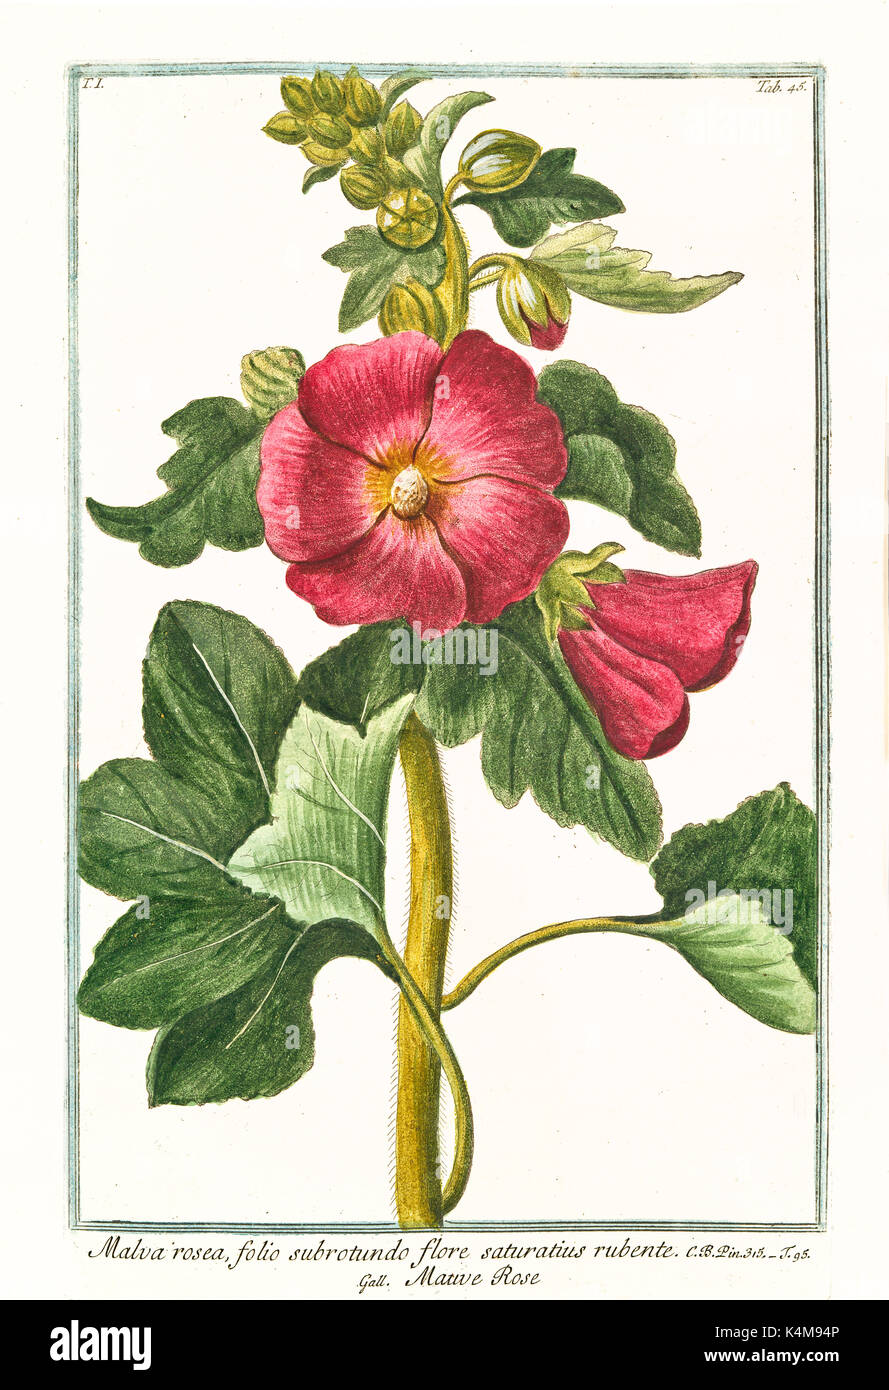 Vieille illustration de Malva rosea, flore rubente, saturatius (Alcea rosea). Par G. Bonelli sur Hortus Romanus, publ. N. Martelli, Rome, 1772 - 93 Banque D'Images